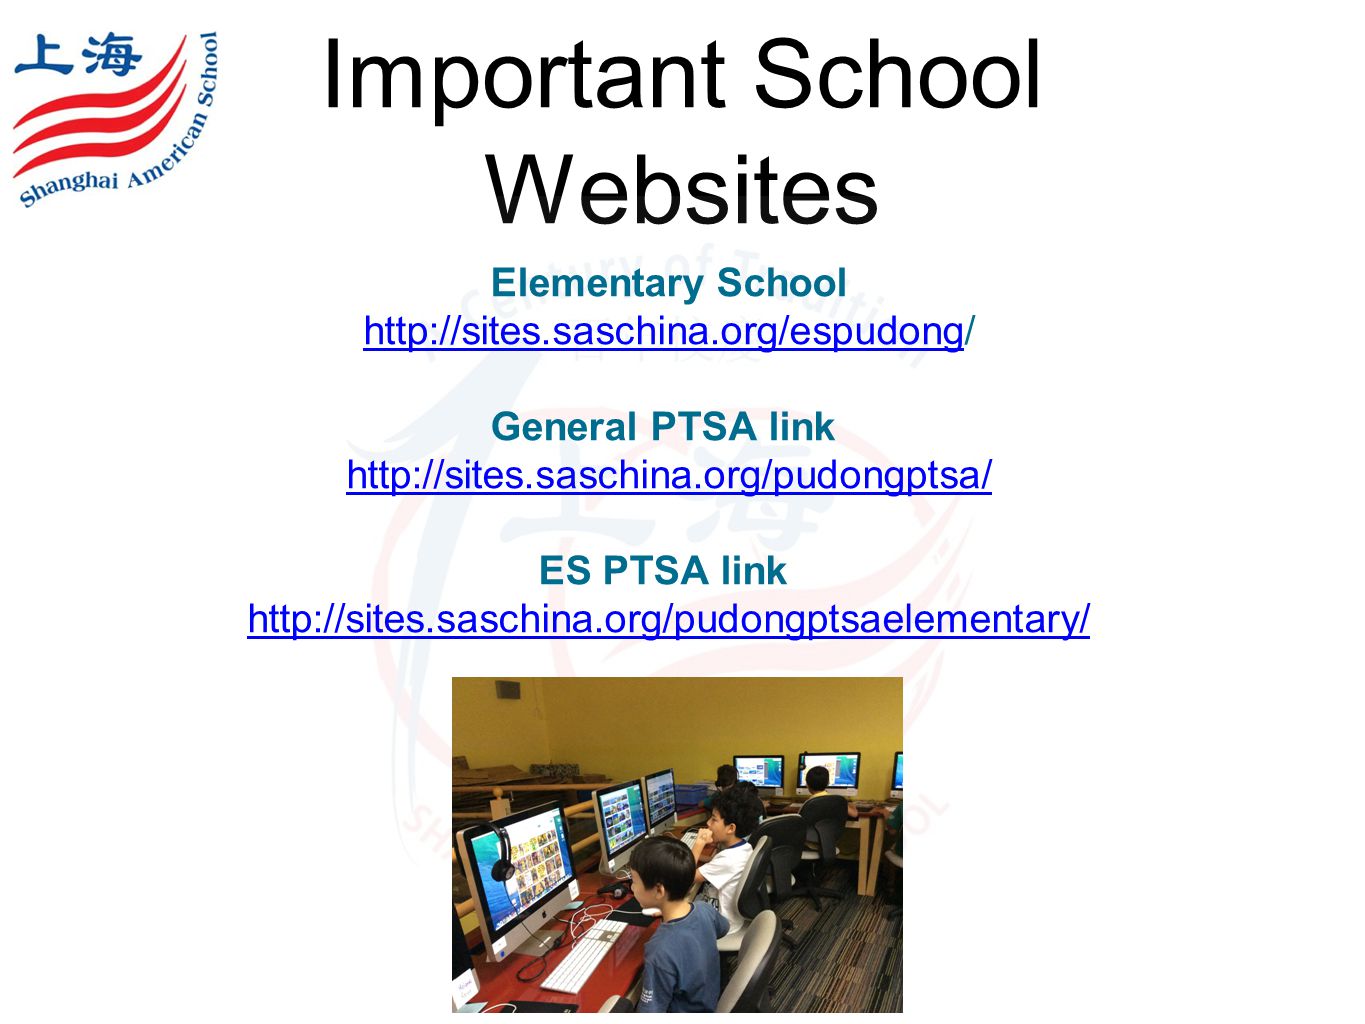 Important School Websites Elementary School   General PTSA link   ES PTSA link